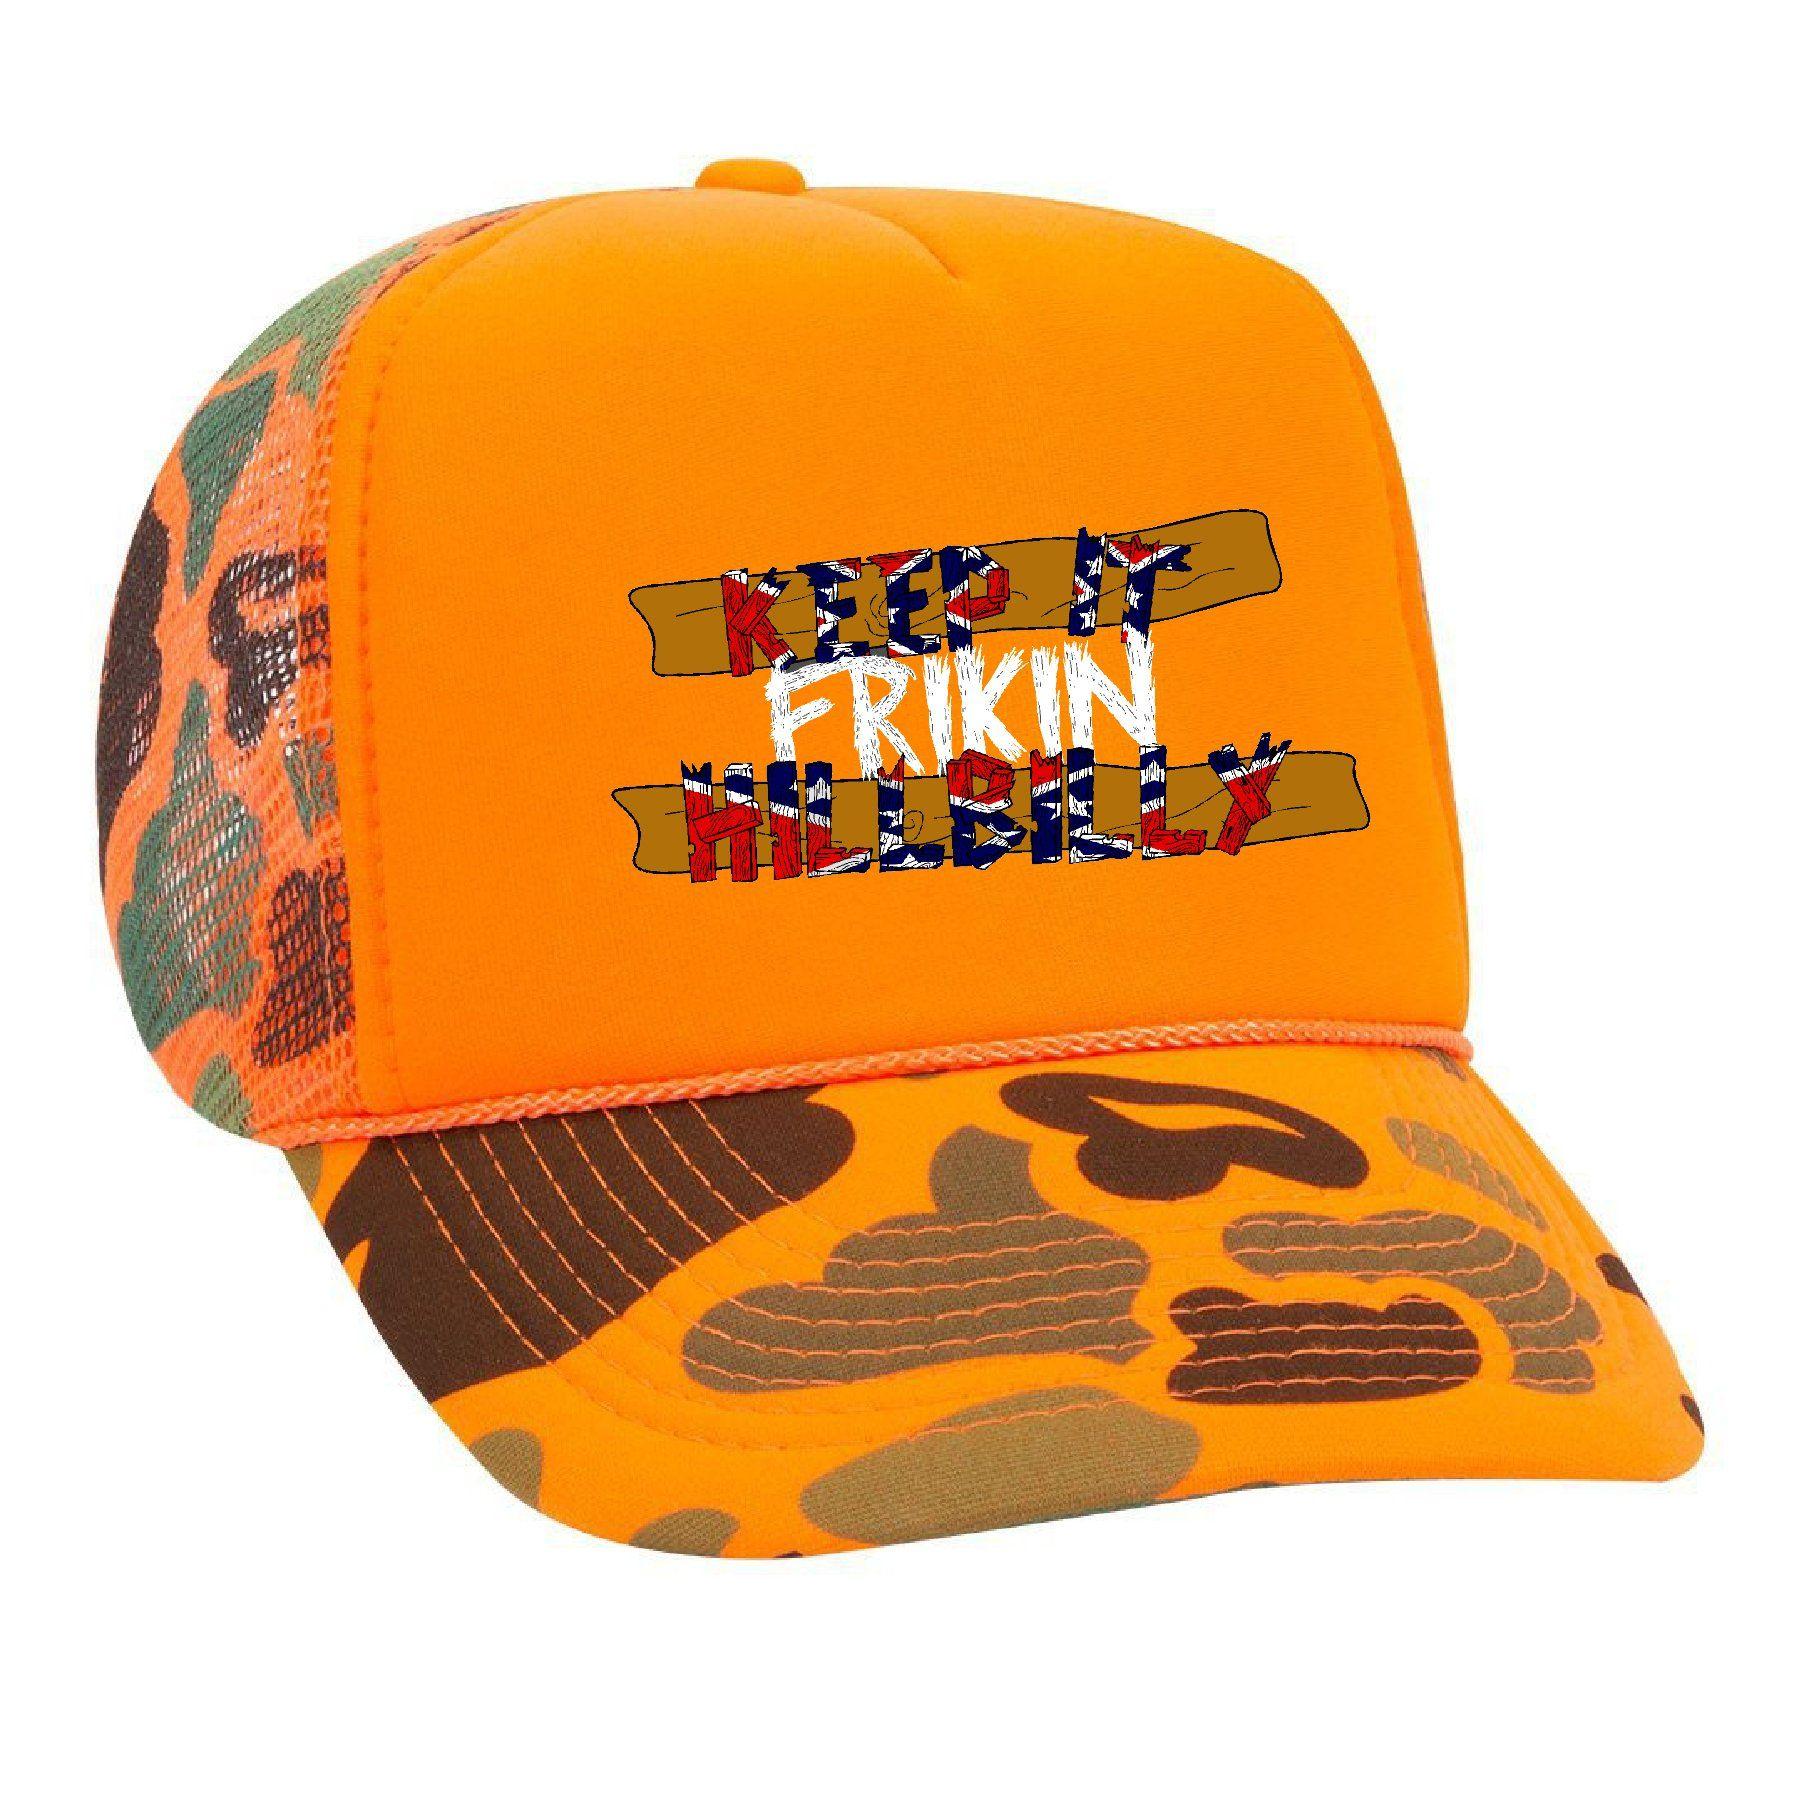 Keep It Hillbilly Logo - KIFH Orange Camo Hat